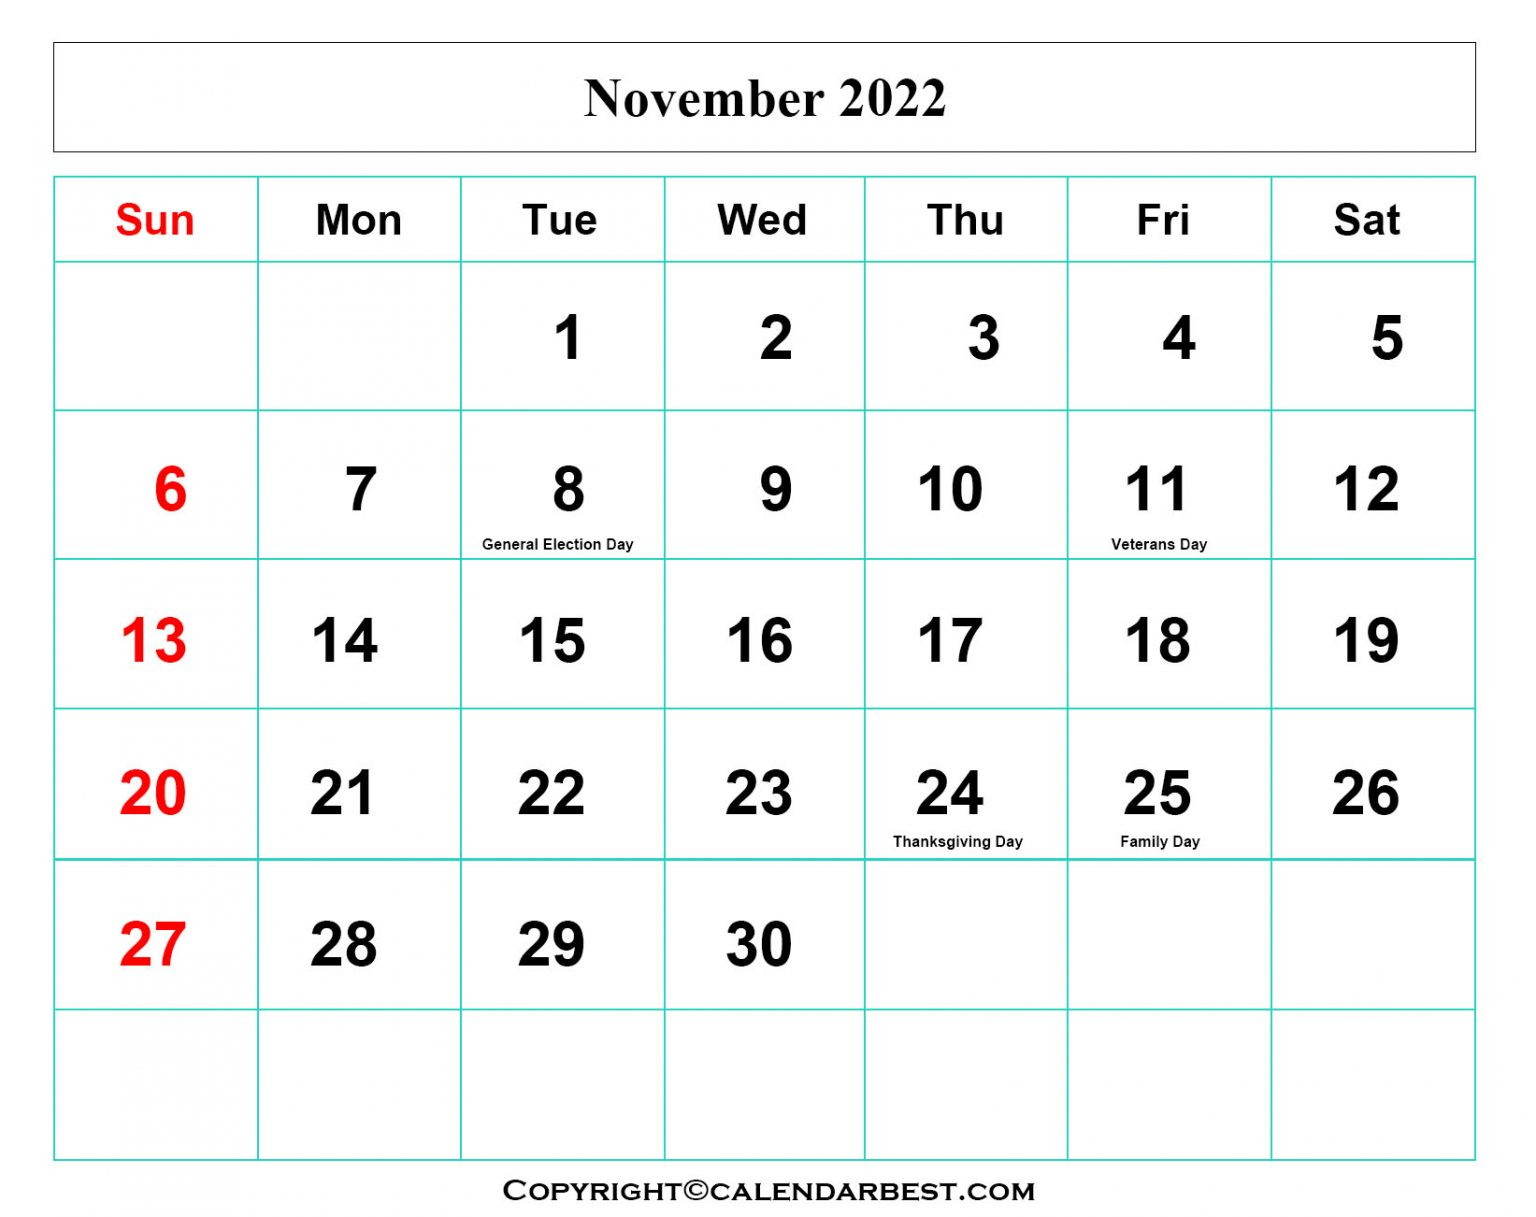 Free Printable November Calendar 2022 With Holidays  November 2022 - June 2022 Calendar